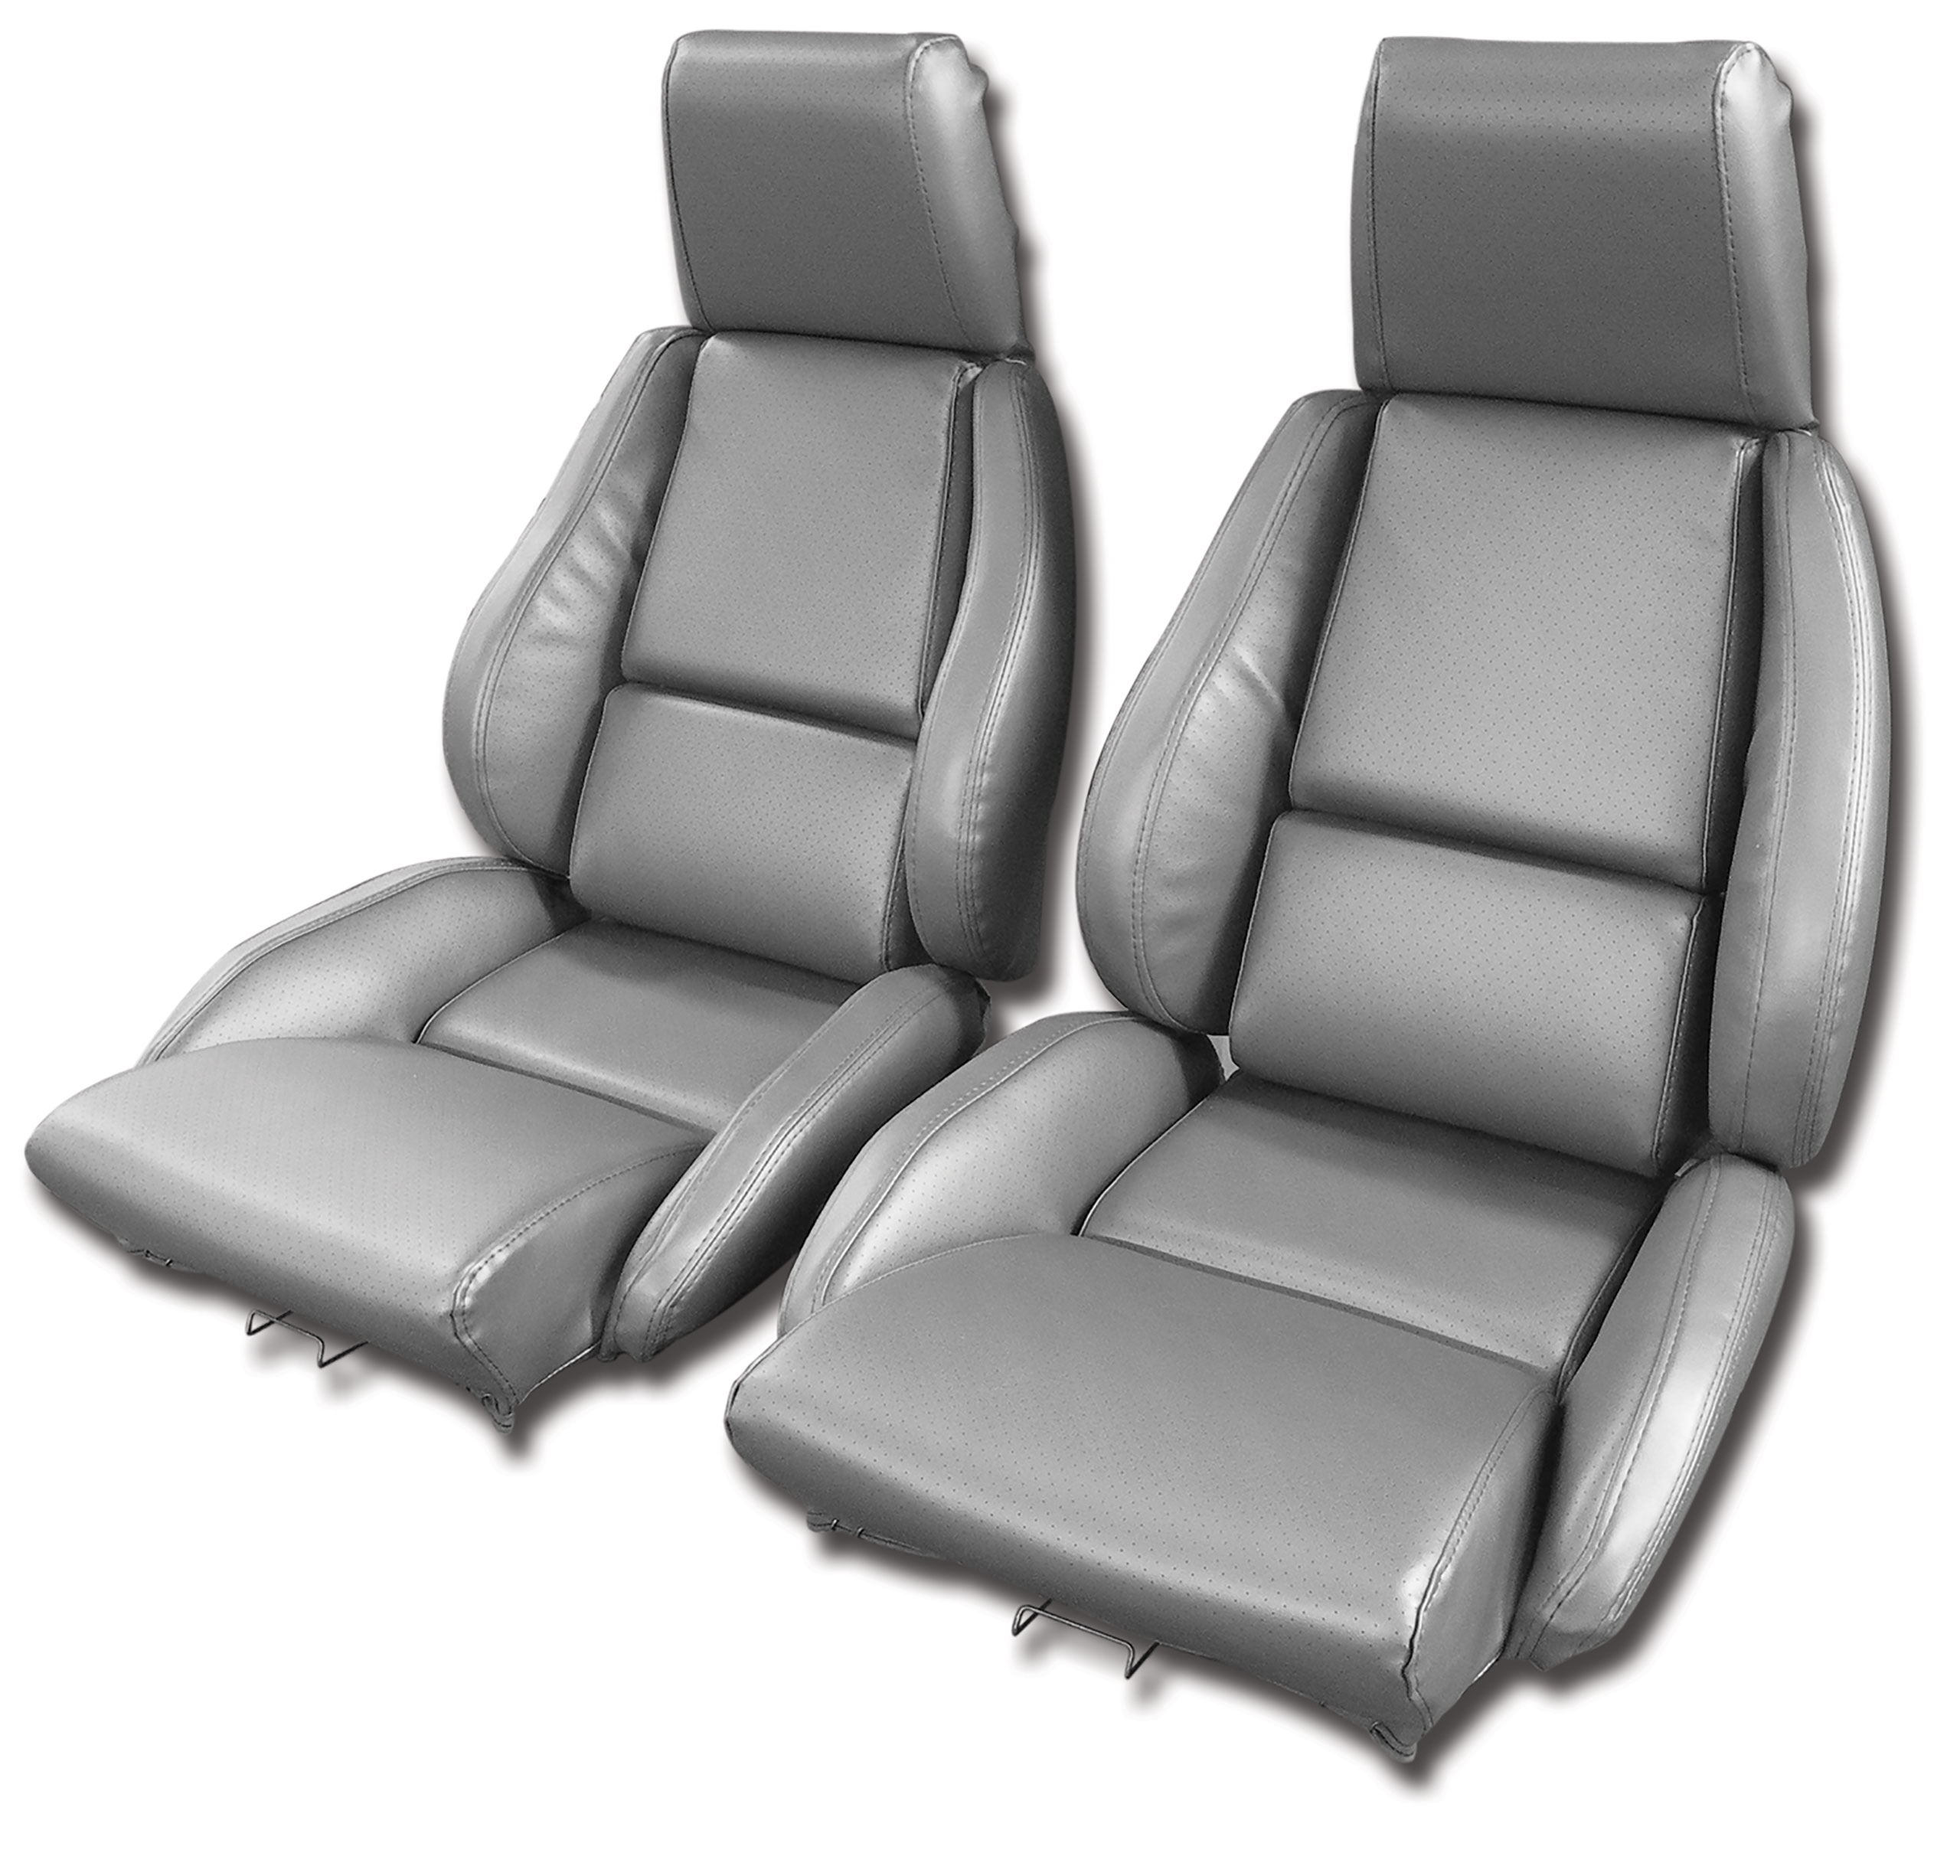 1984-87 Corvette C4 Mounted Leather-Like Vinyl Seat Covers Gray Standard CA-422969 